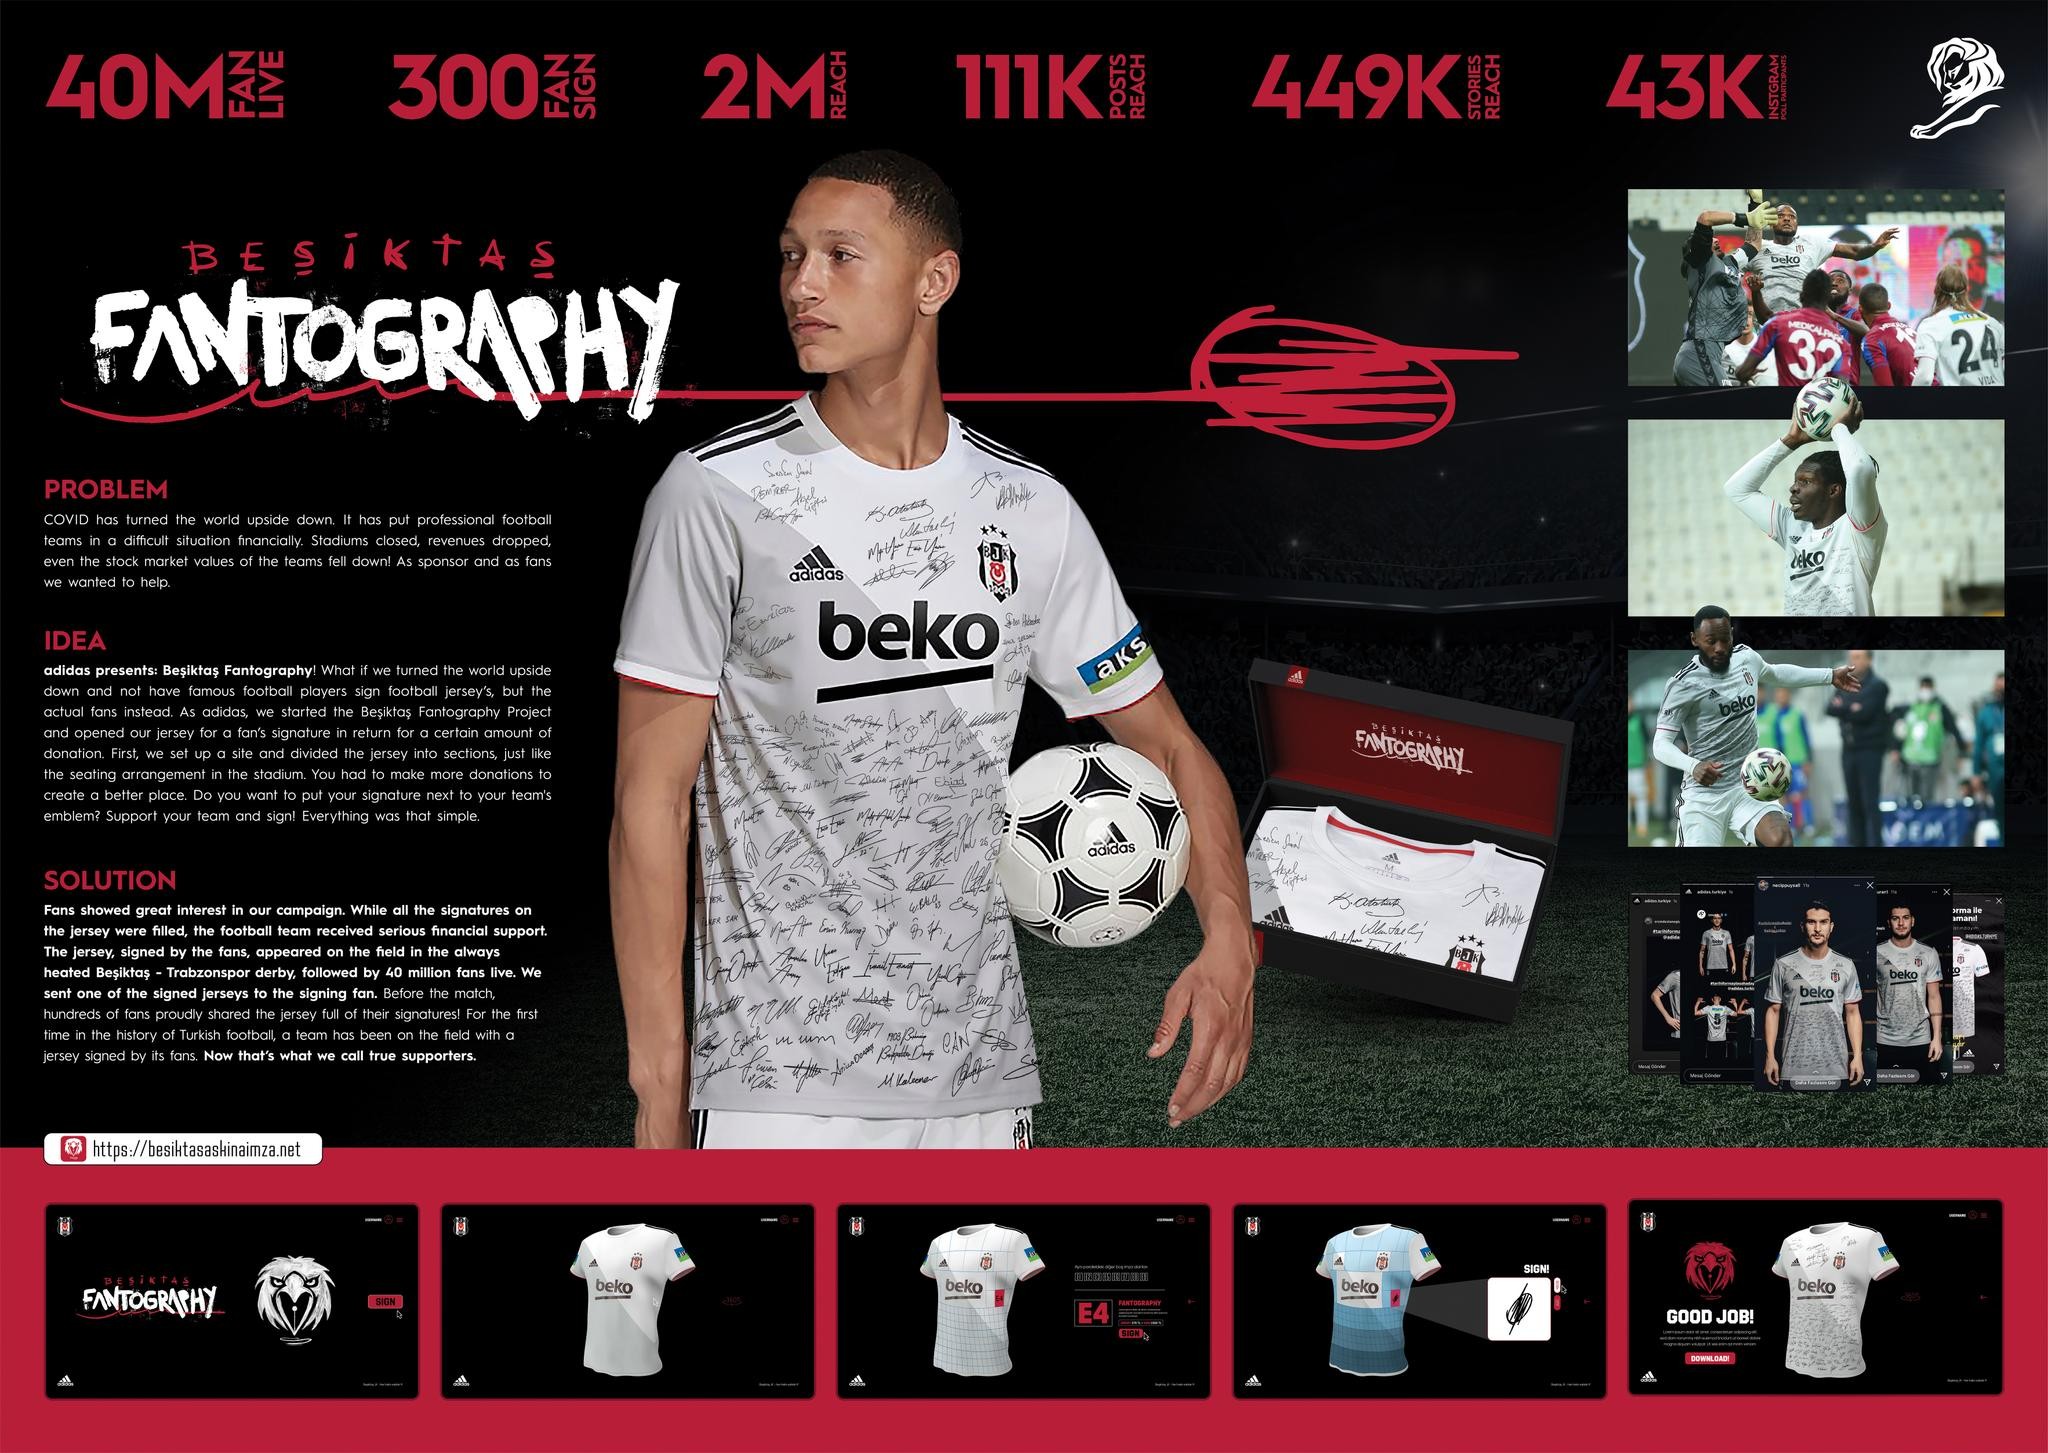 adidas Beşiktaş Fantography